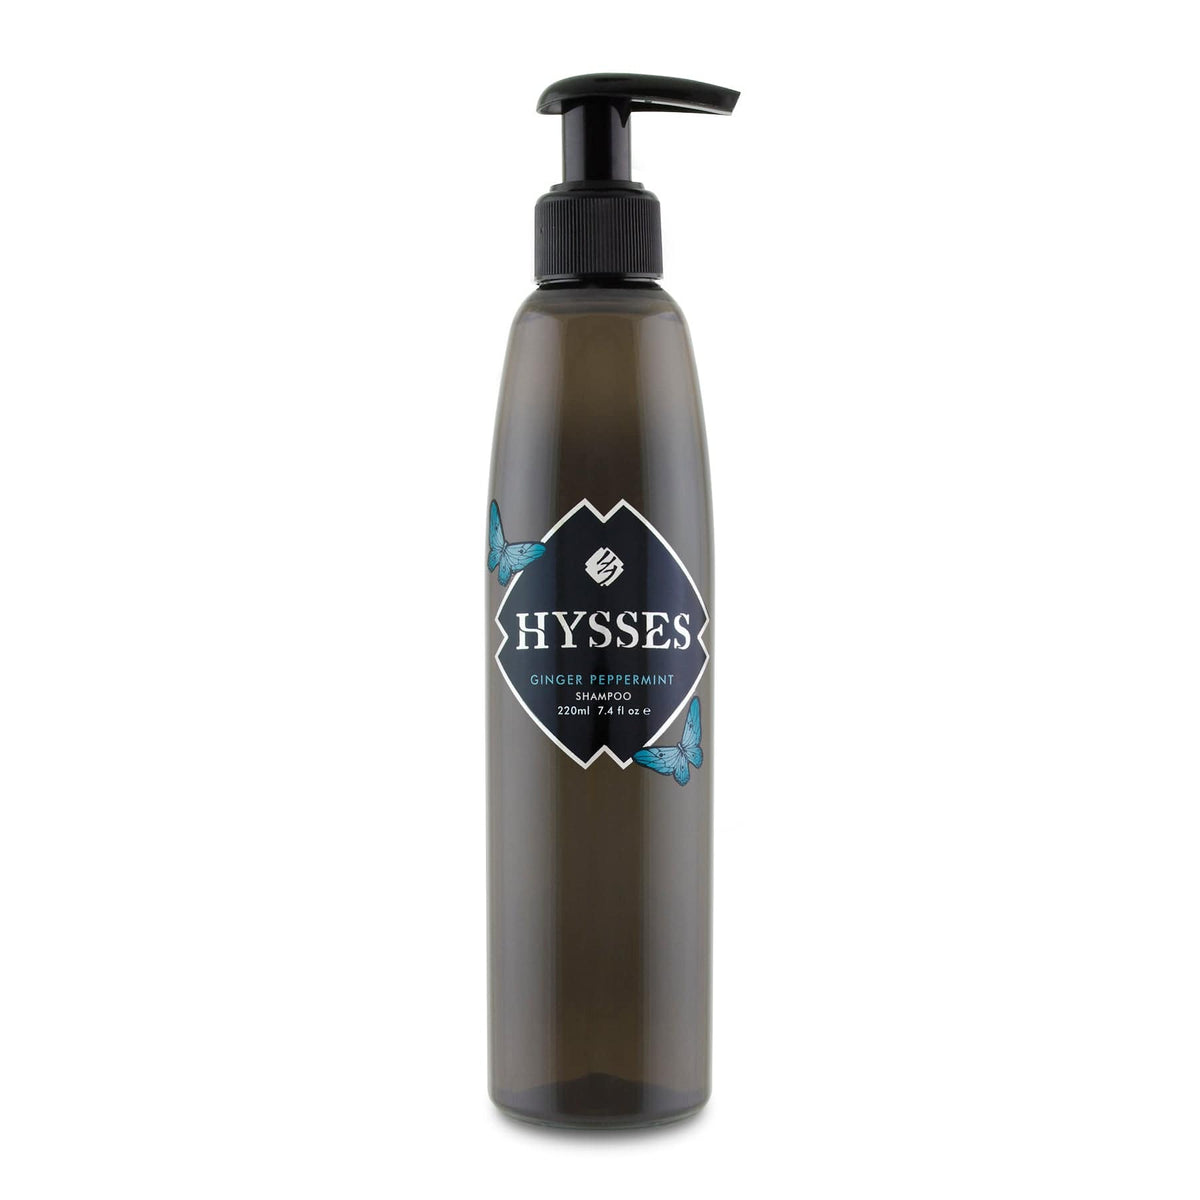 Hysses Hair Care 500ml Shampoo Ginger Peppermint